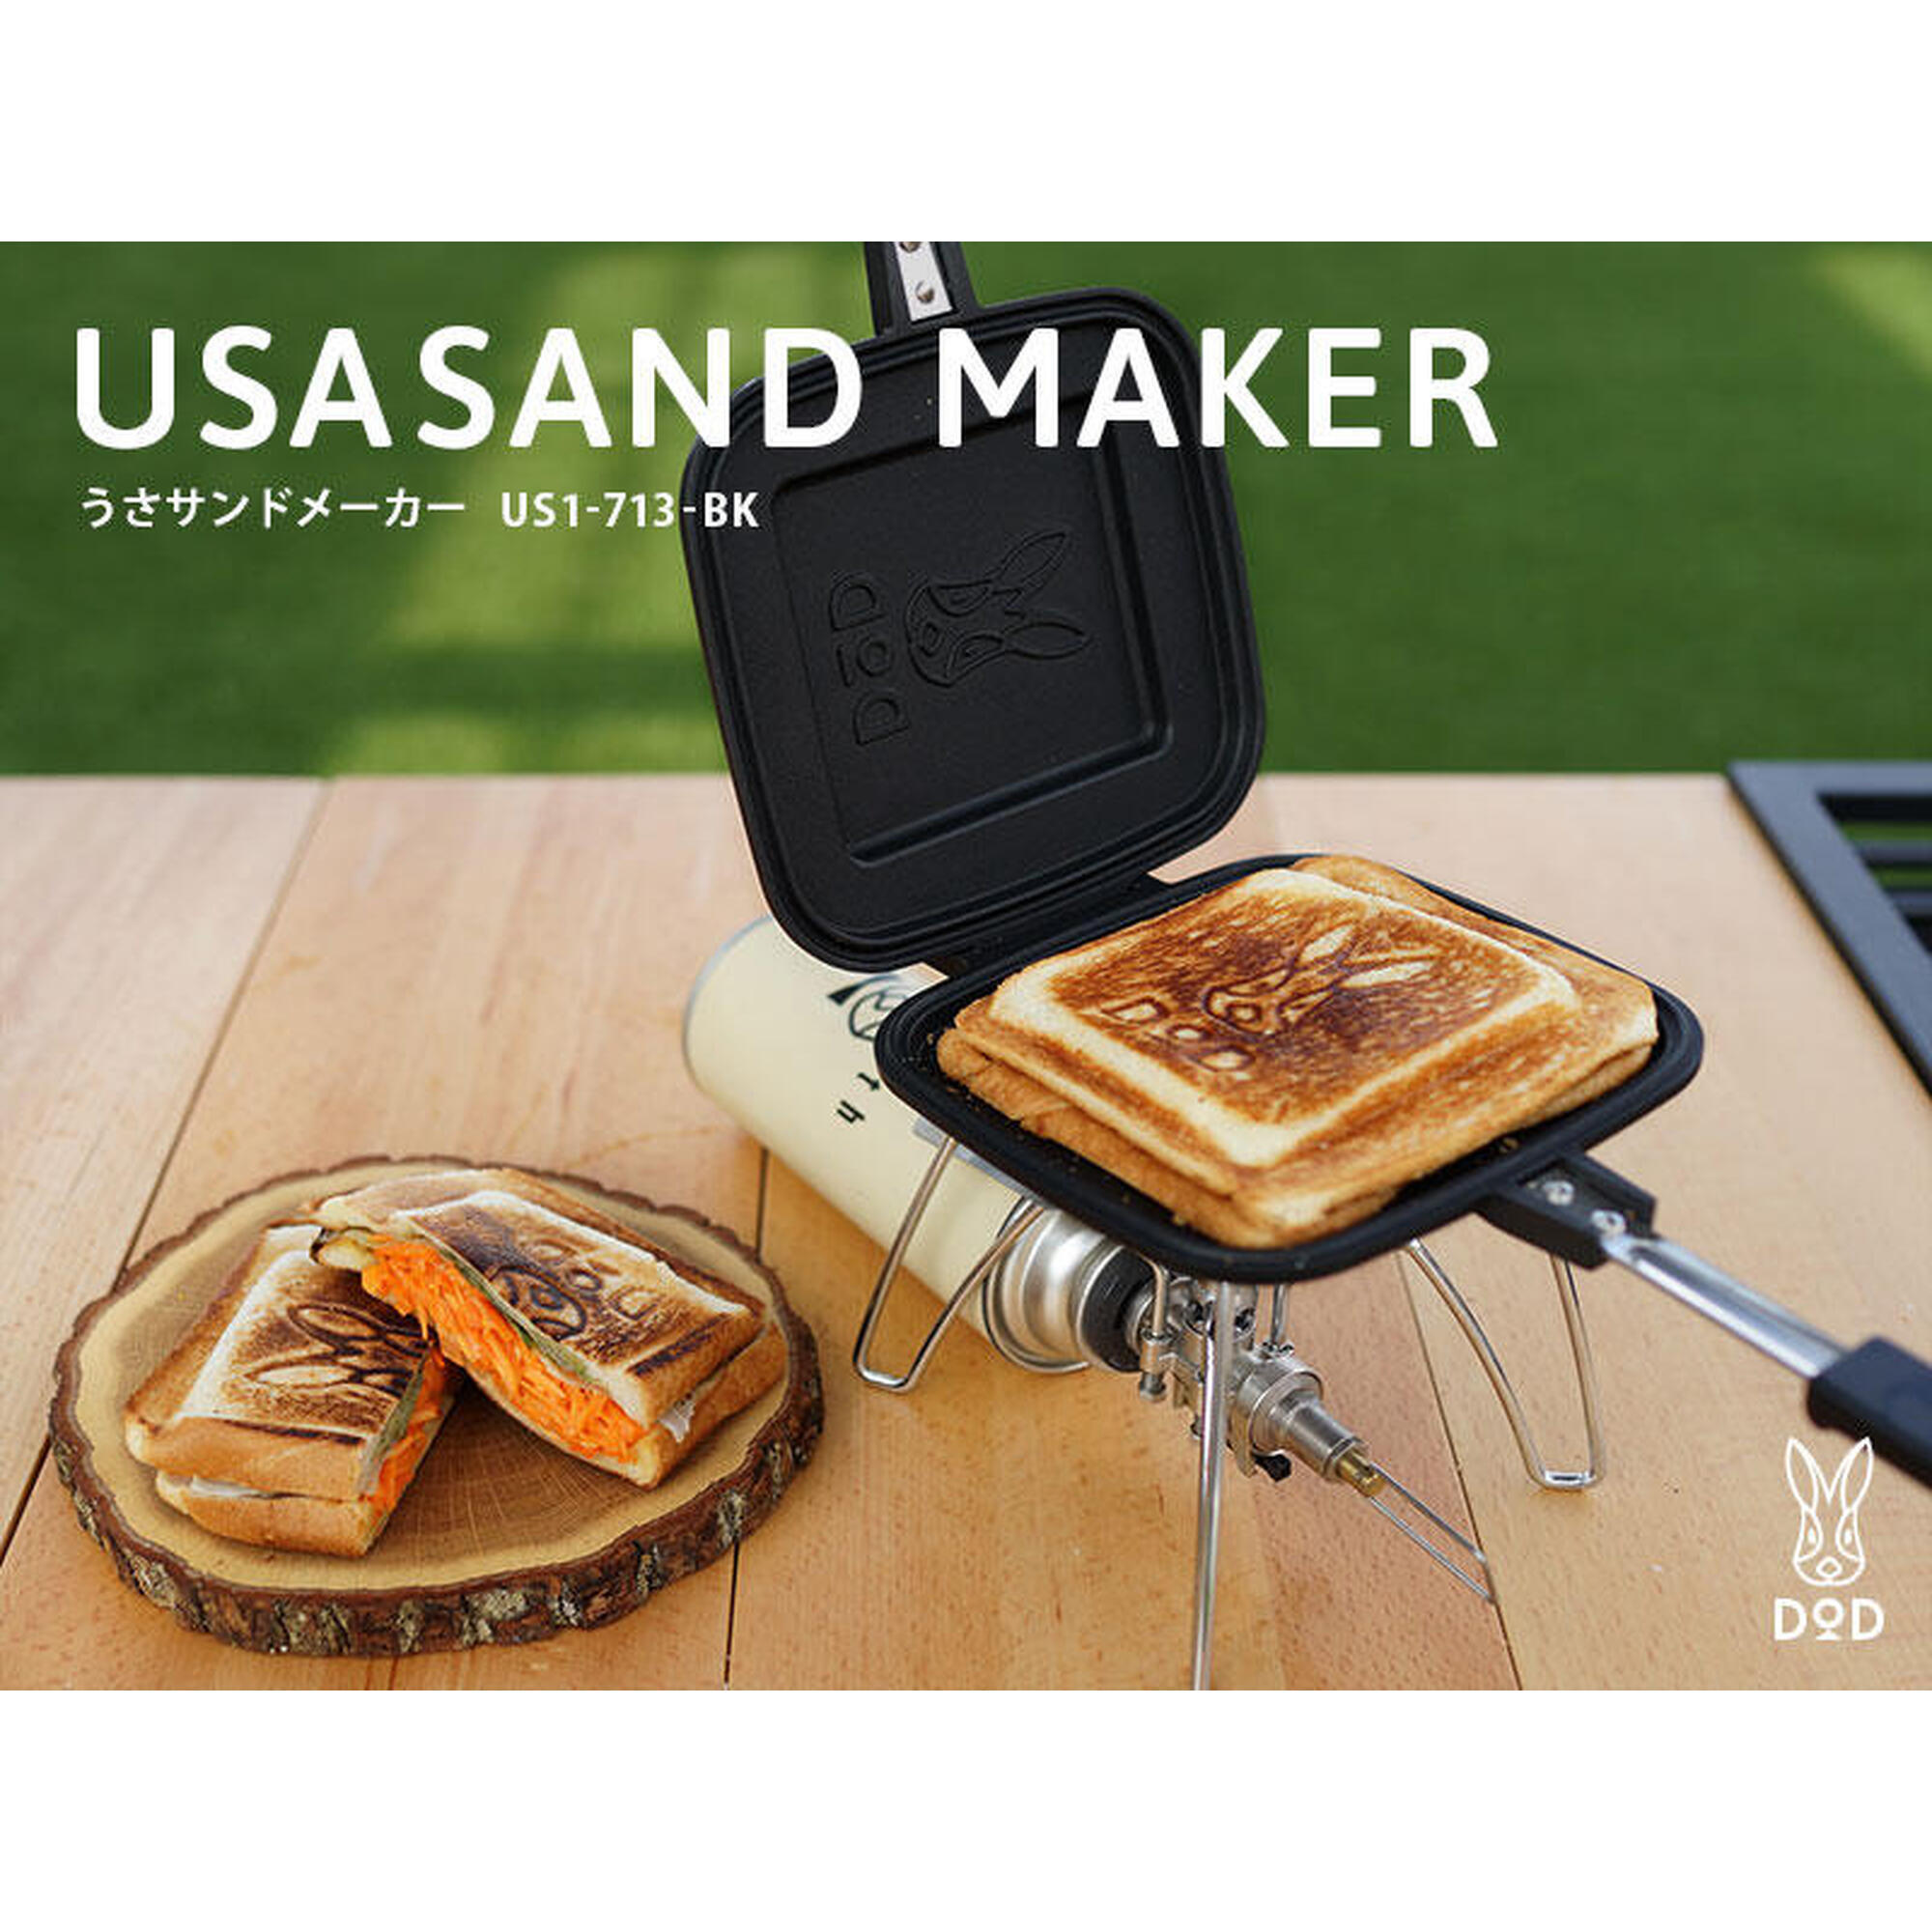 US1-713-BK USASAND Sandwish and Toast maker